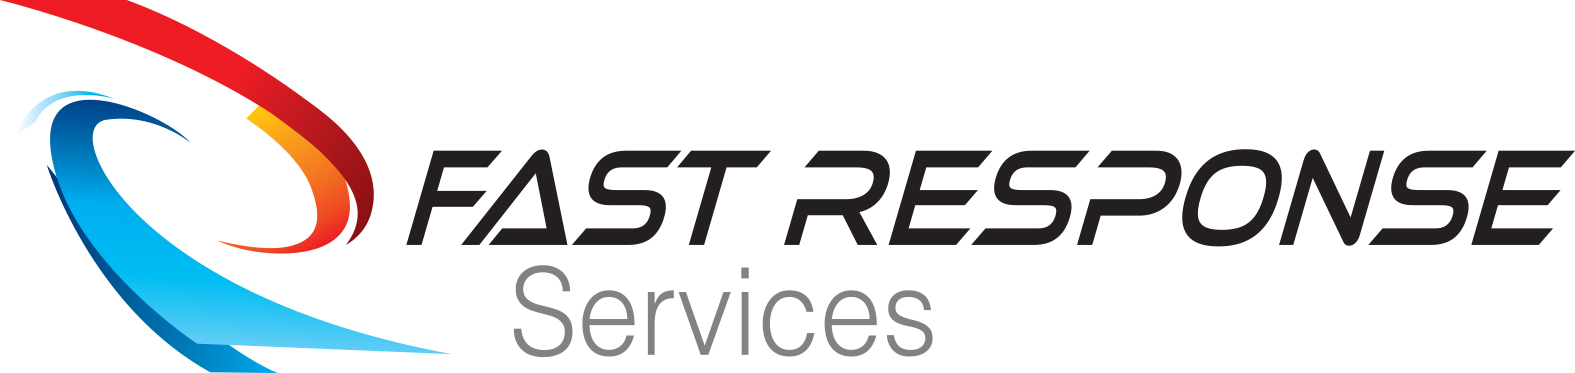 Fast Response Services Logo